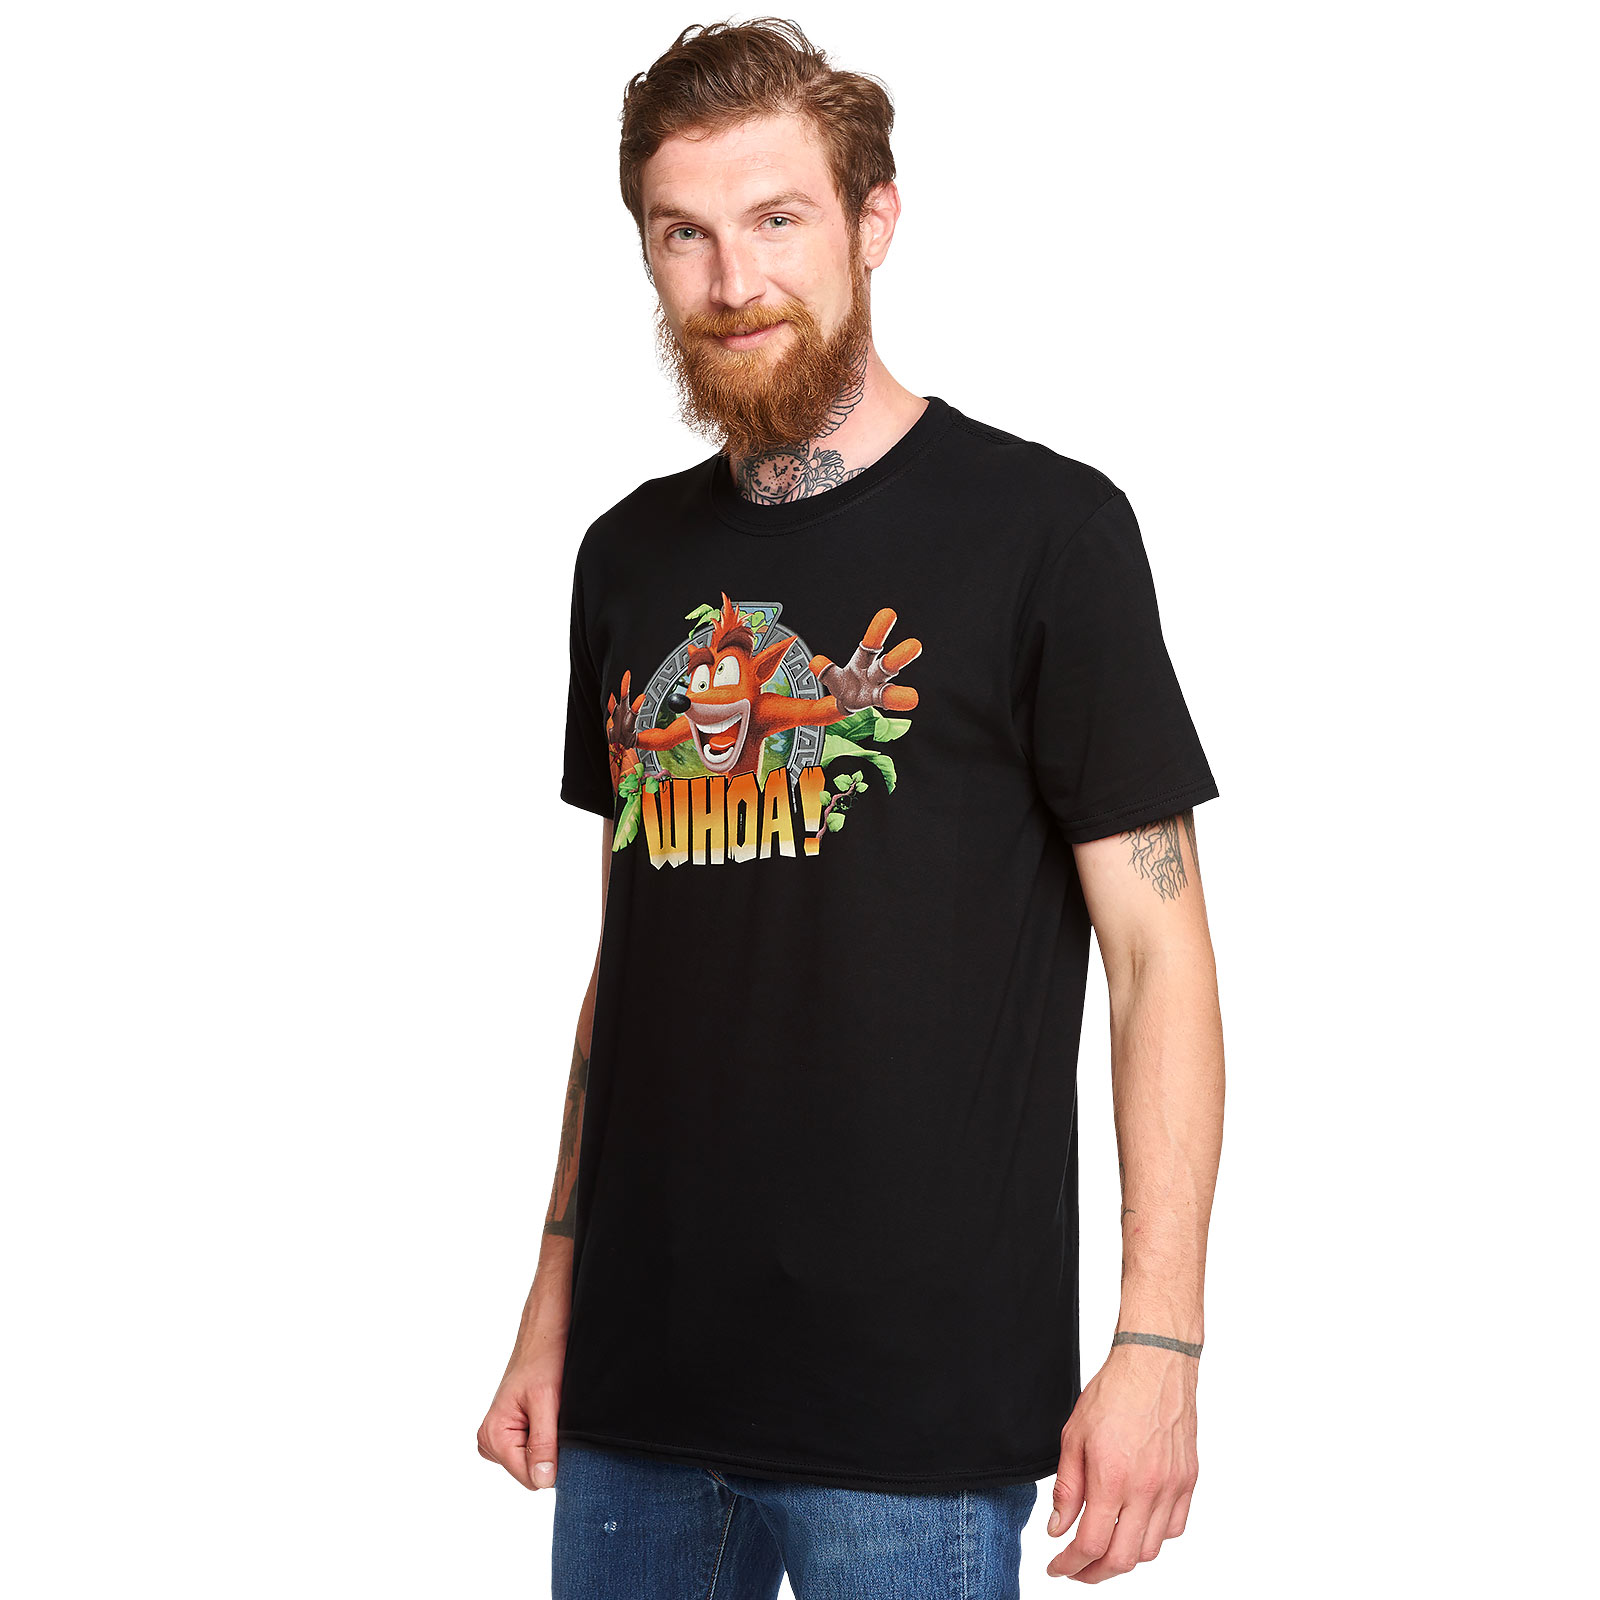 Crash Bandicoot - Whoa T-Shirt schwarz